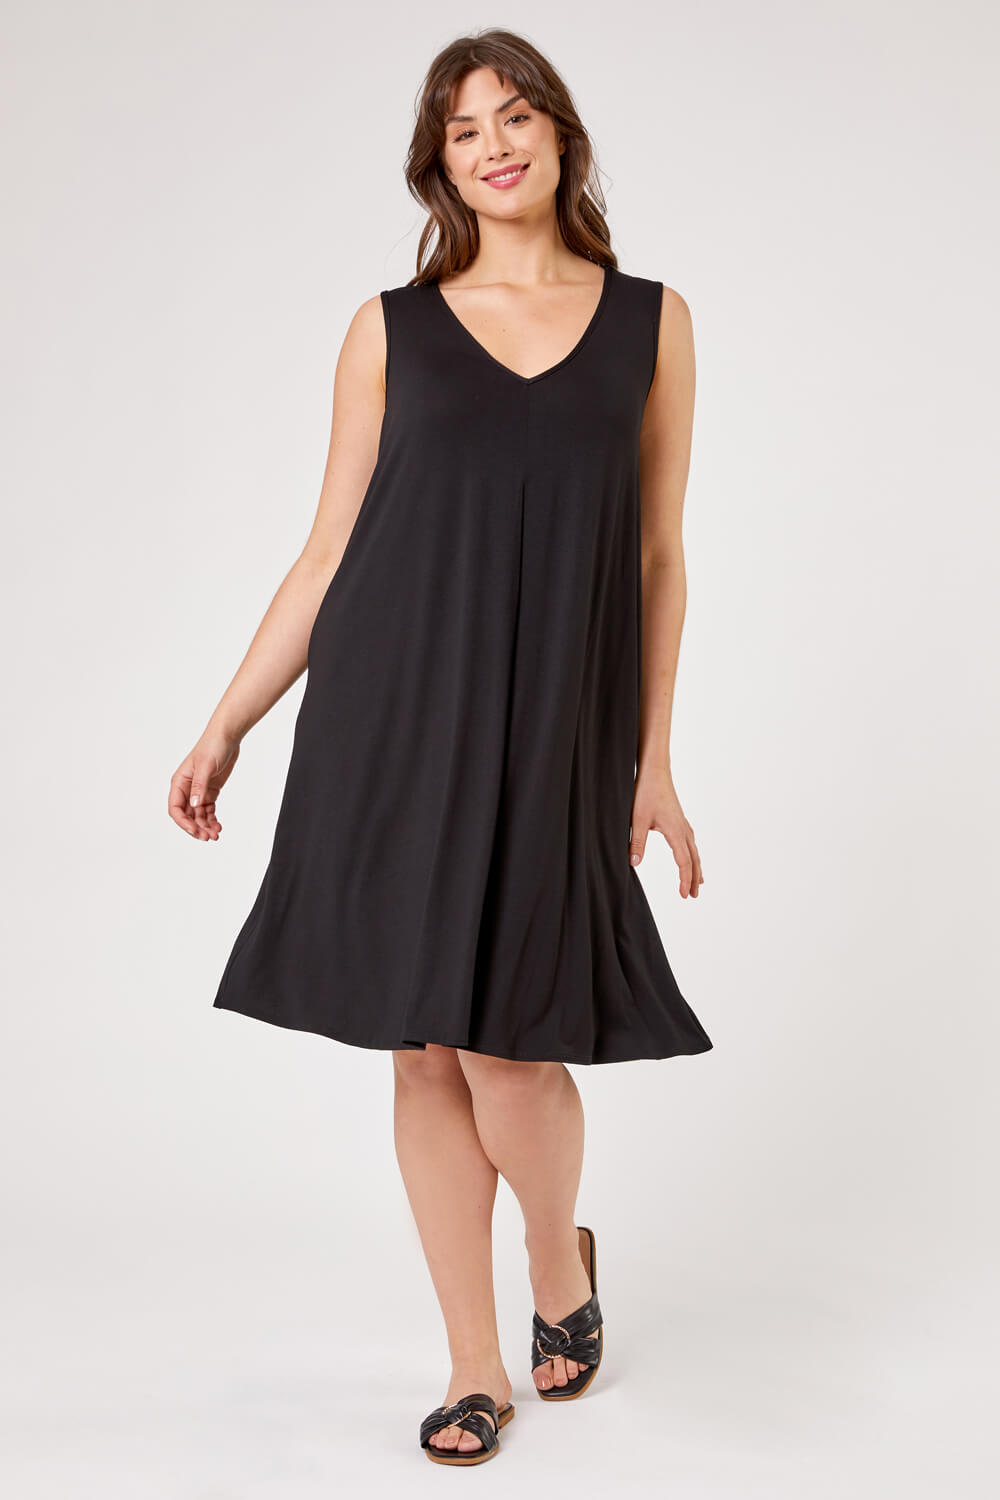 Black Curve Plain Pleat Swing Dress, Image 3 of 4